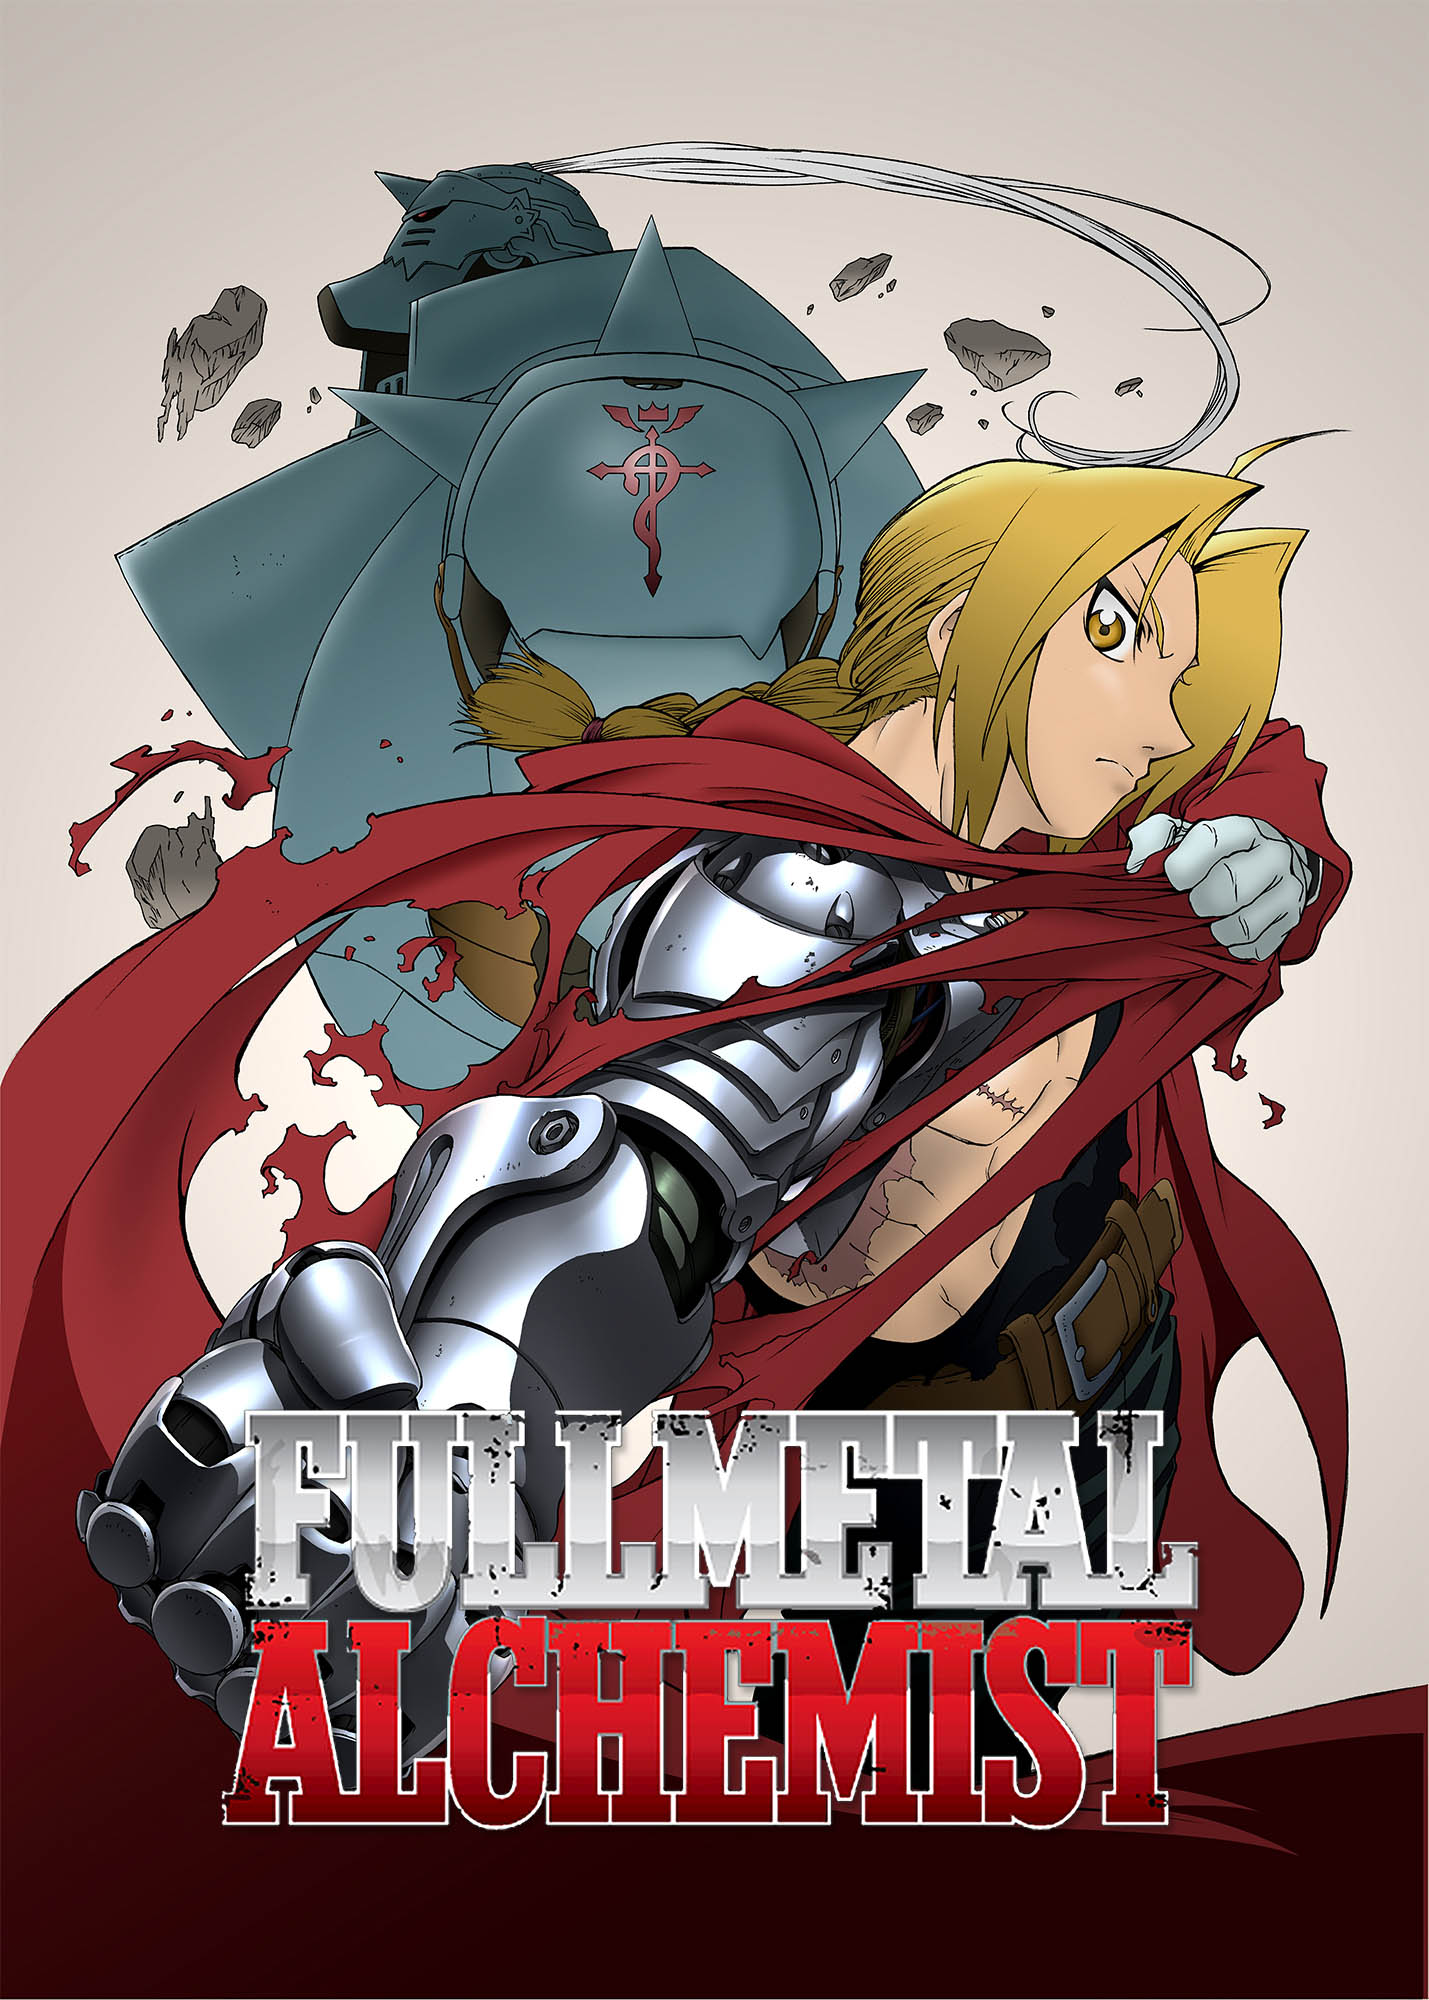 Fullmetal Alchemist: Brotherhood (Dub) One is All, All is One